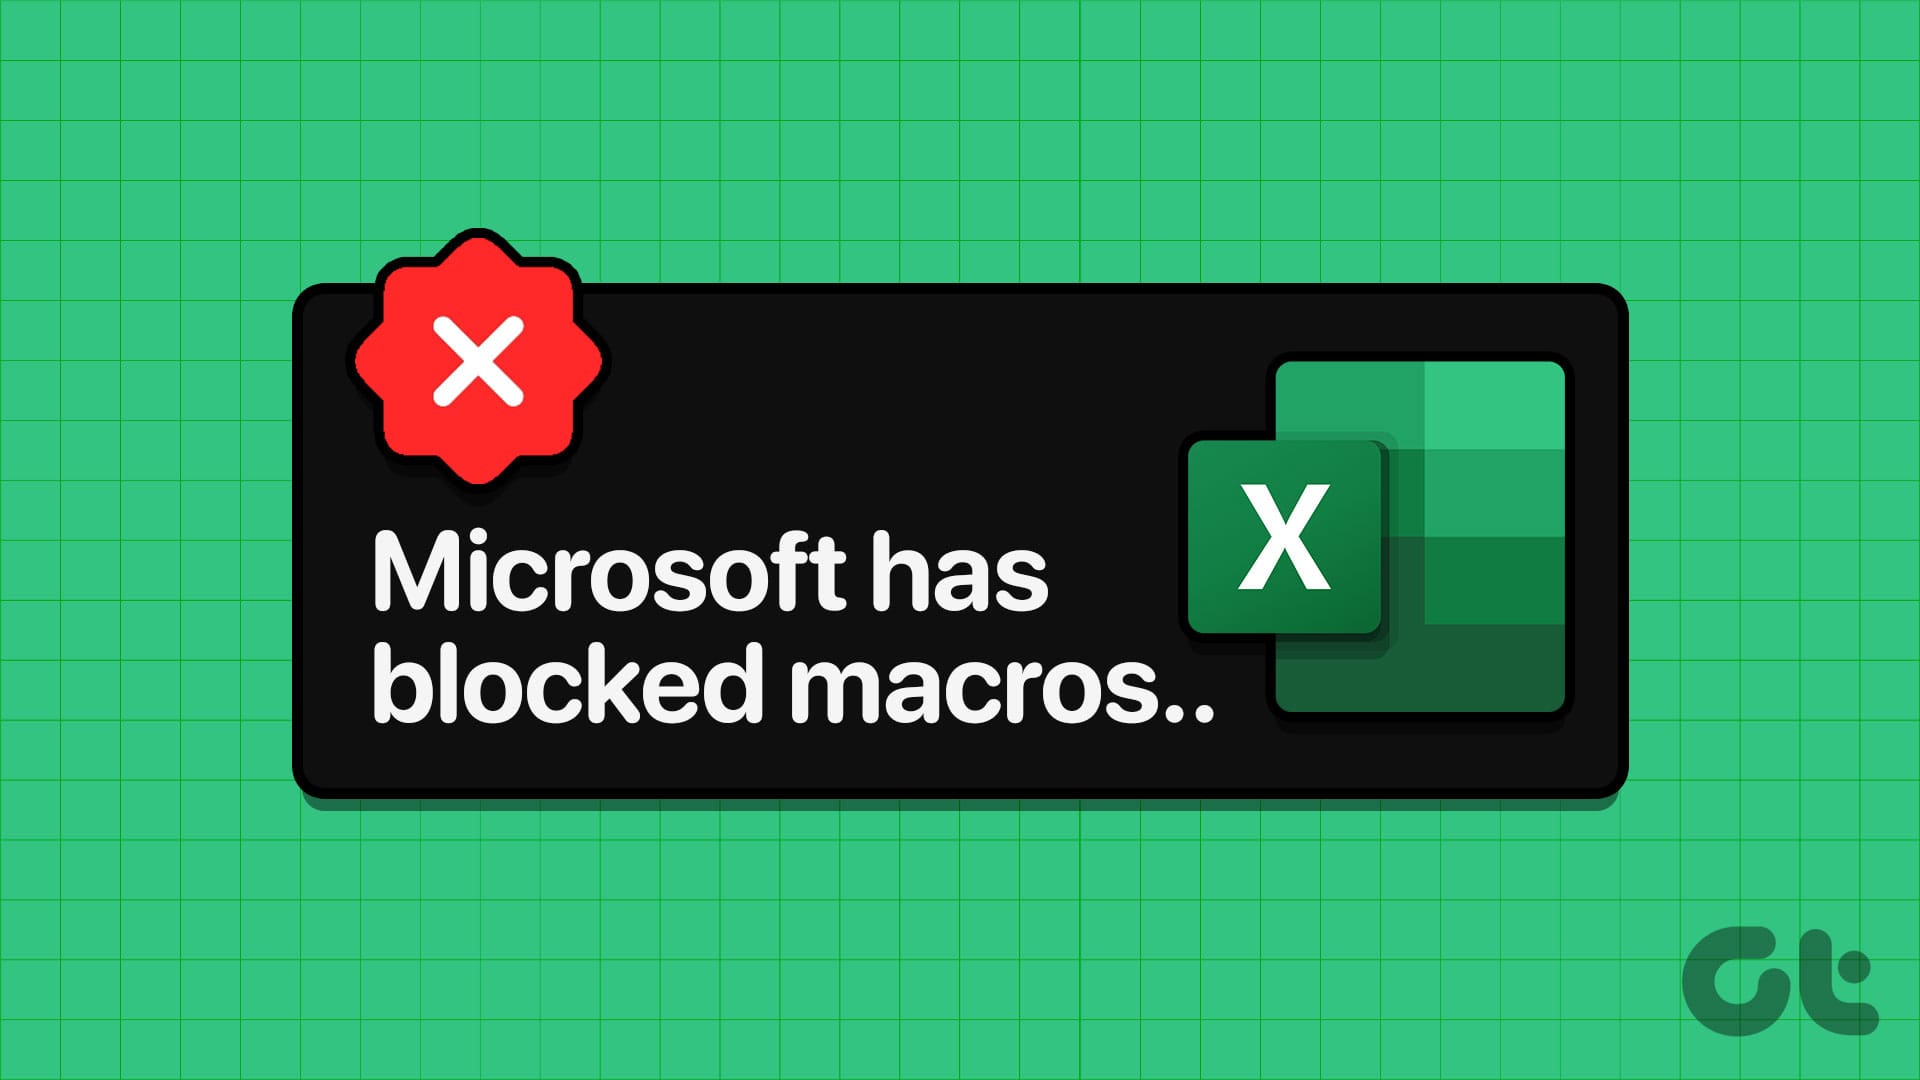 Top Fixes for Microsoft Has Blocked Macros Error in Excel for Windows